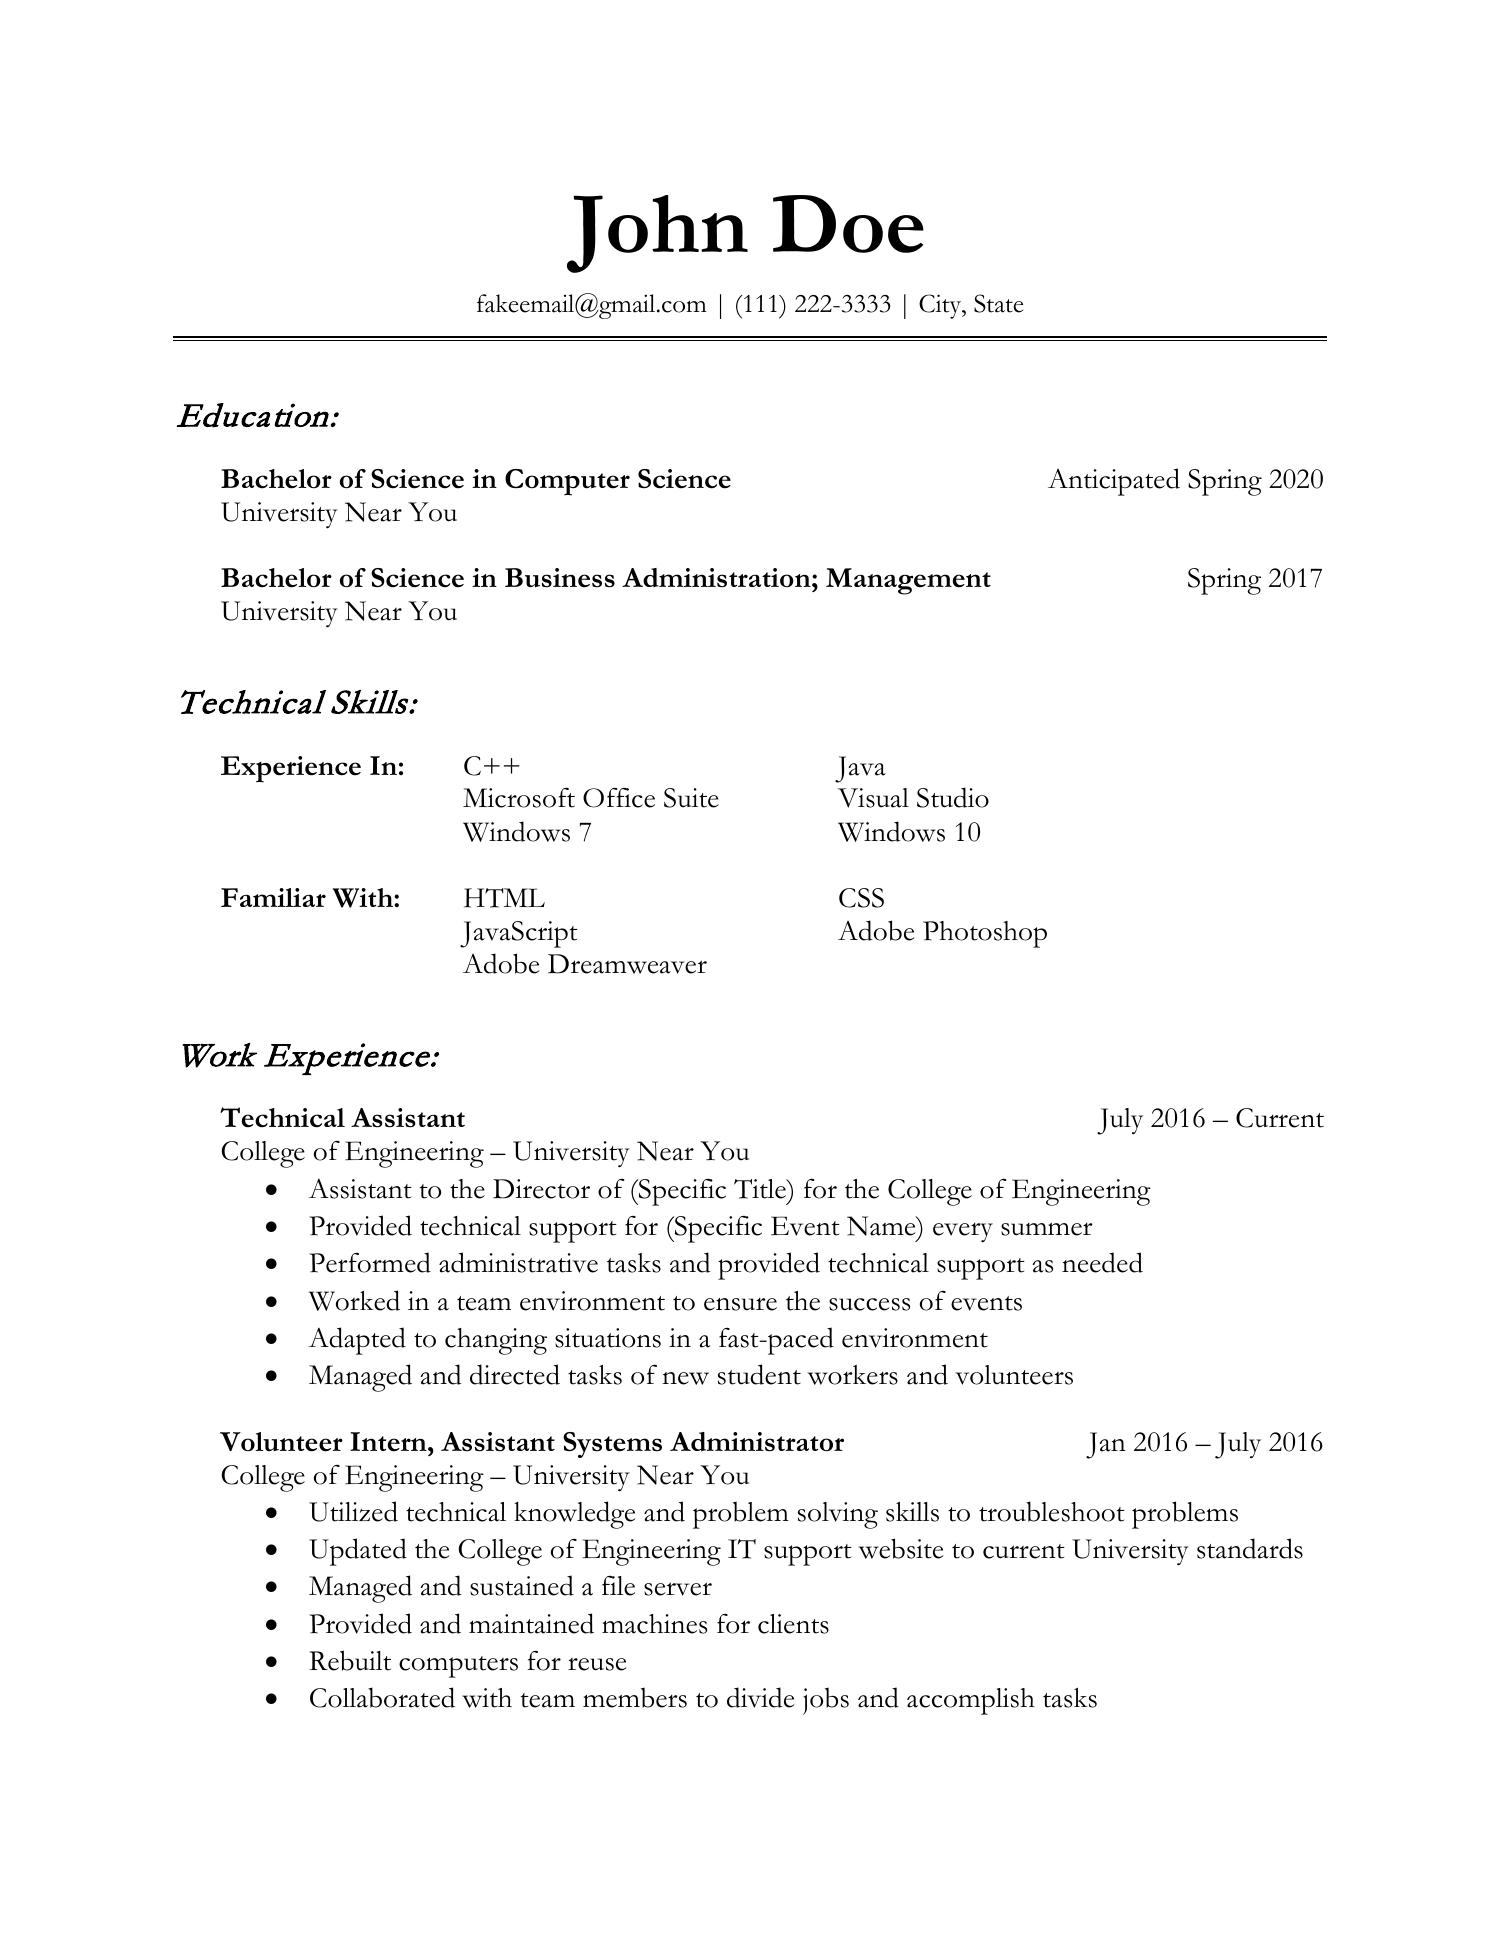 John Doe Resume.pdf | DocDroid